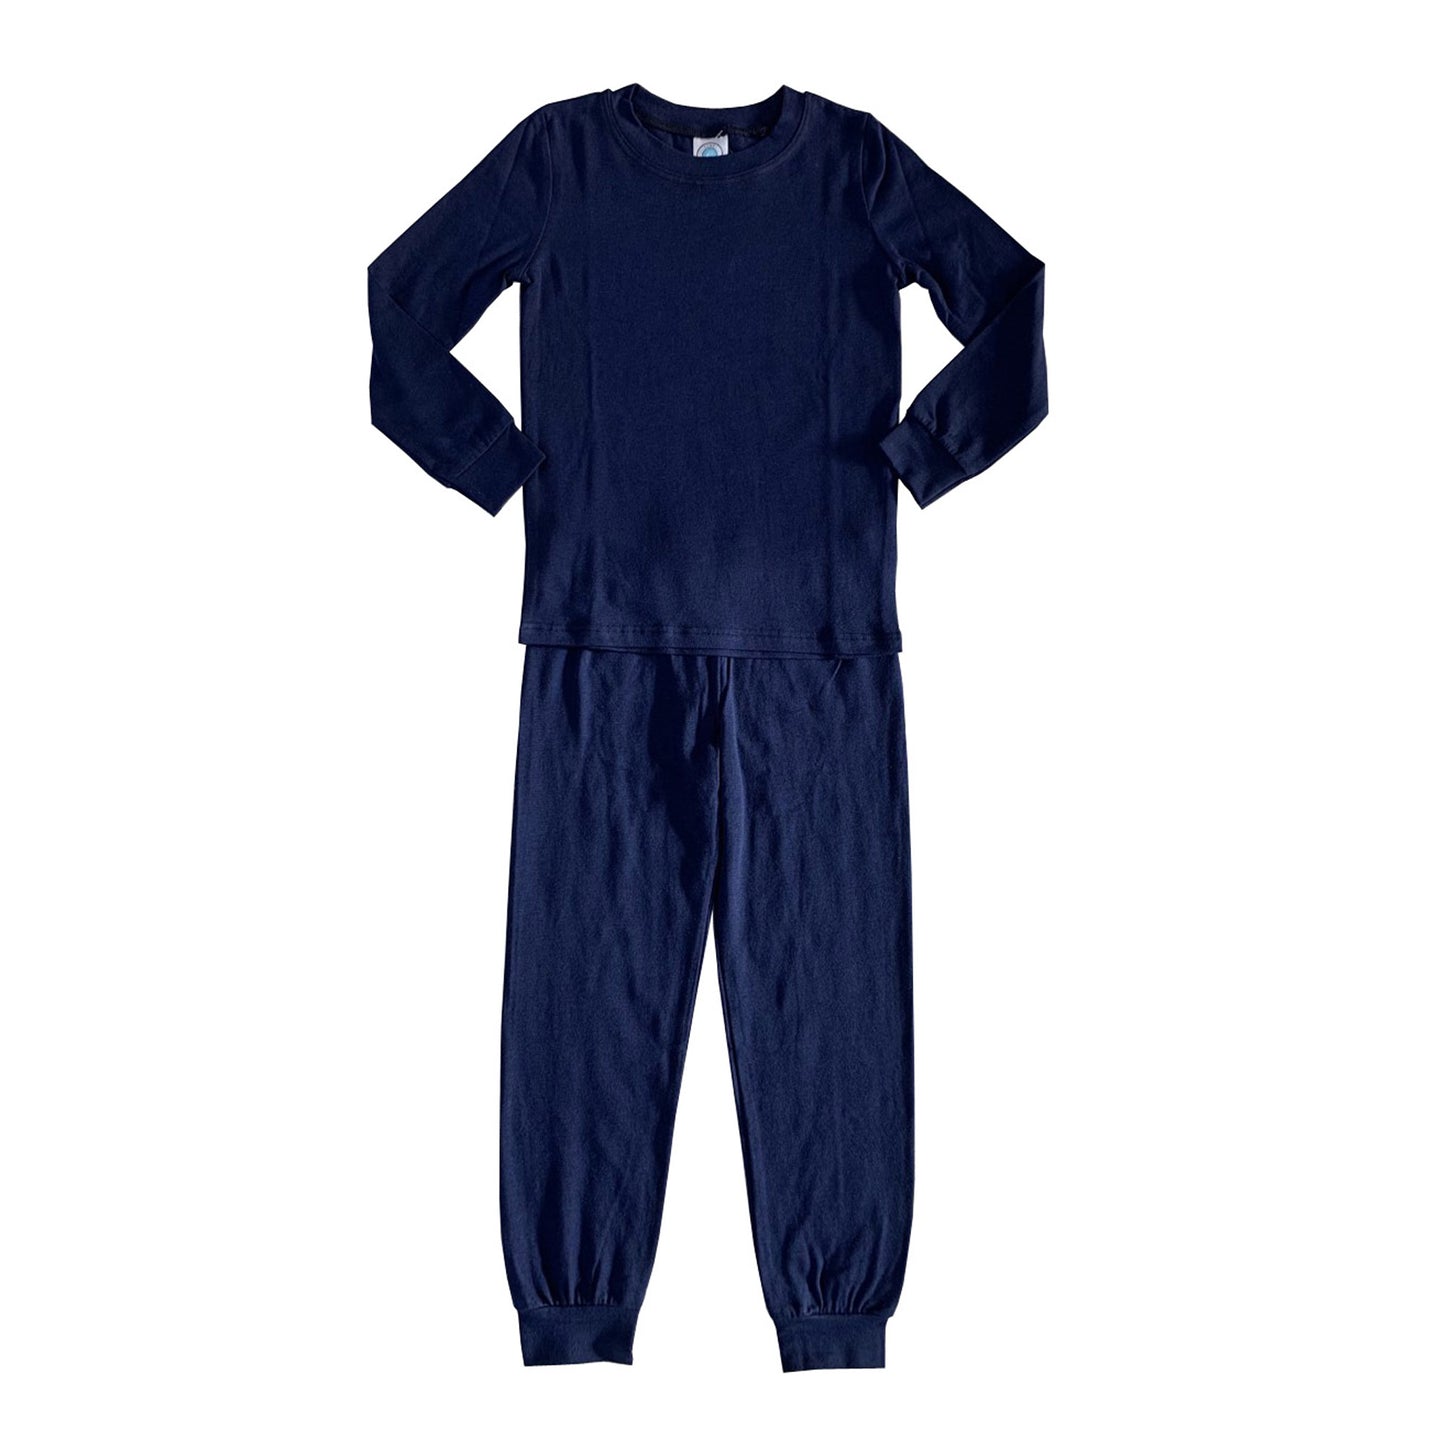 BCS49 Esme Boys Full Length Set Pajamas Black Grey Navy Charcoal Slate Solid